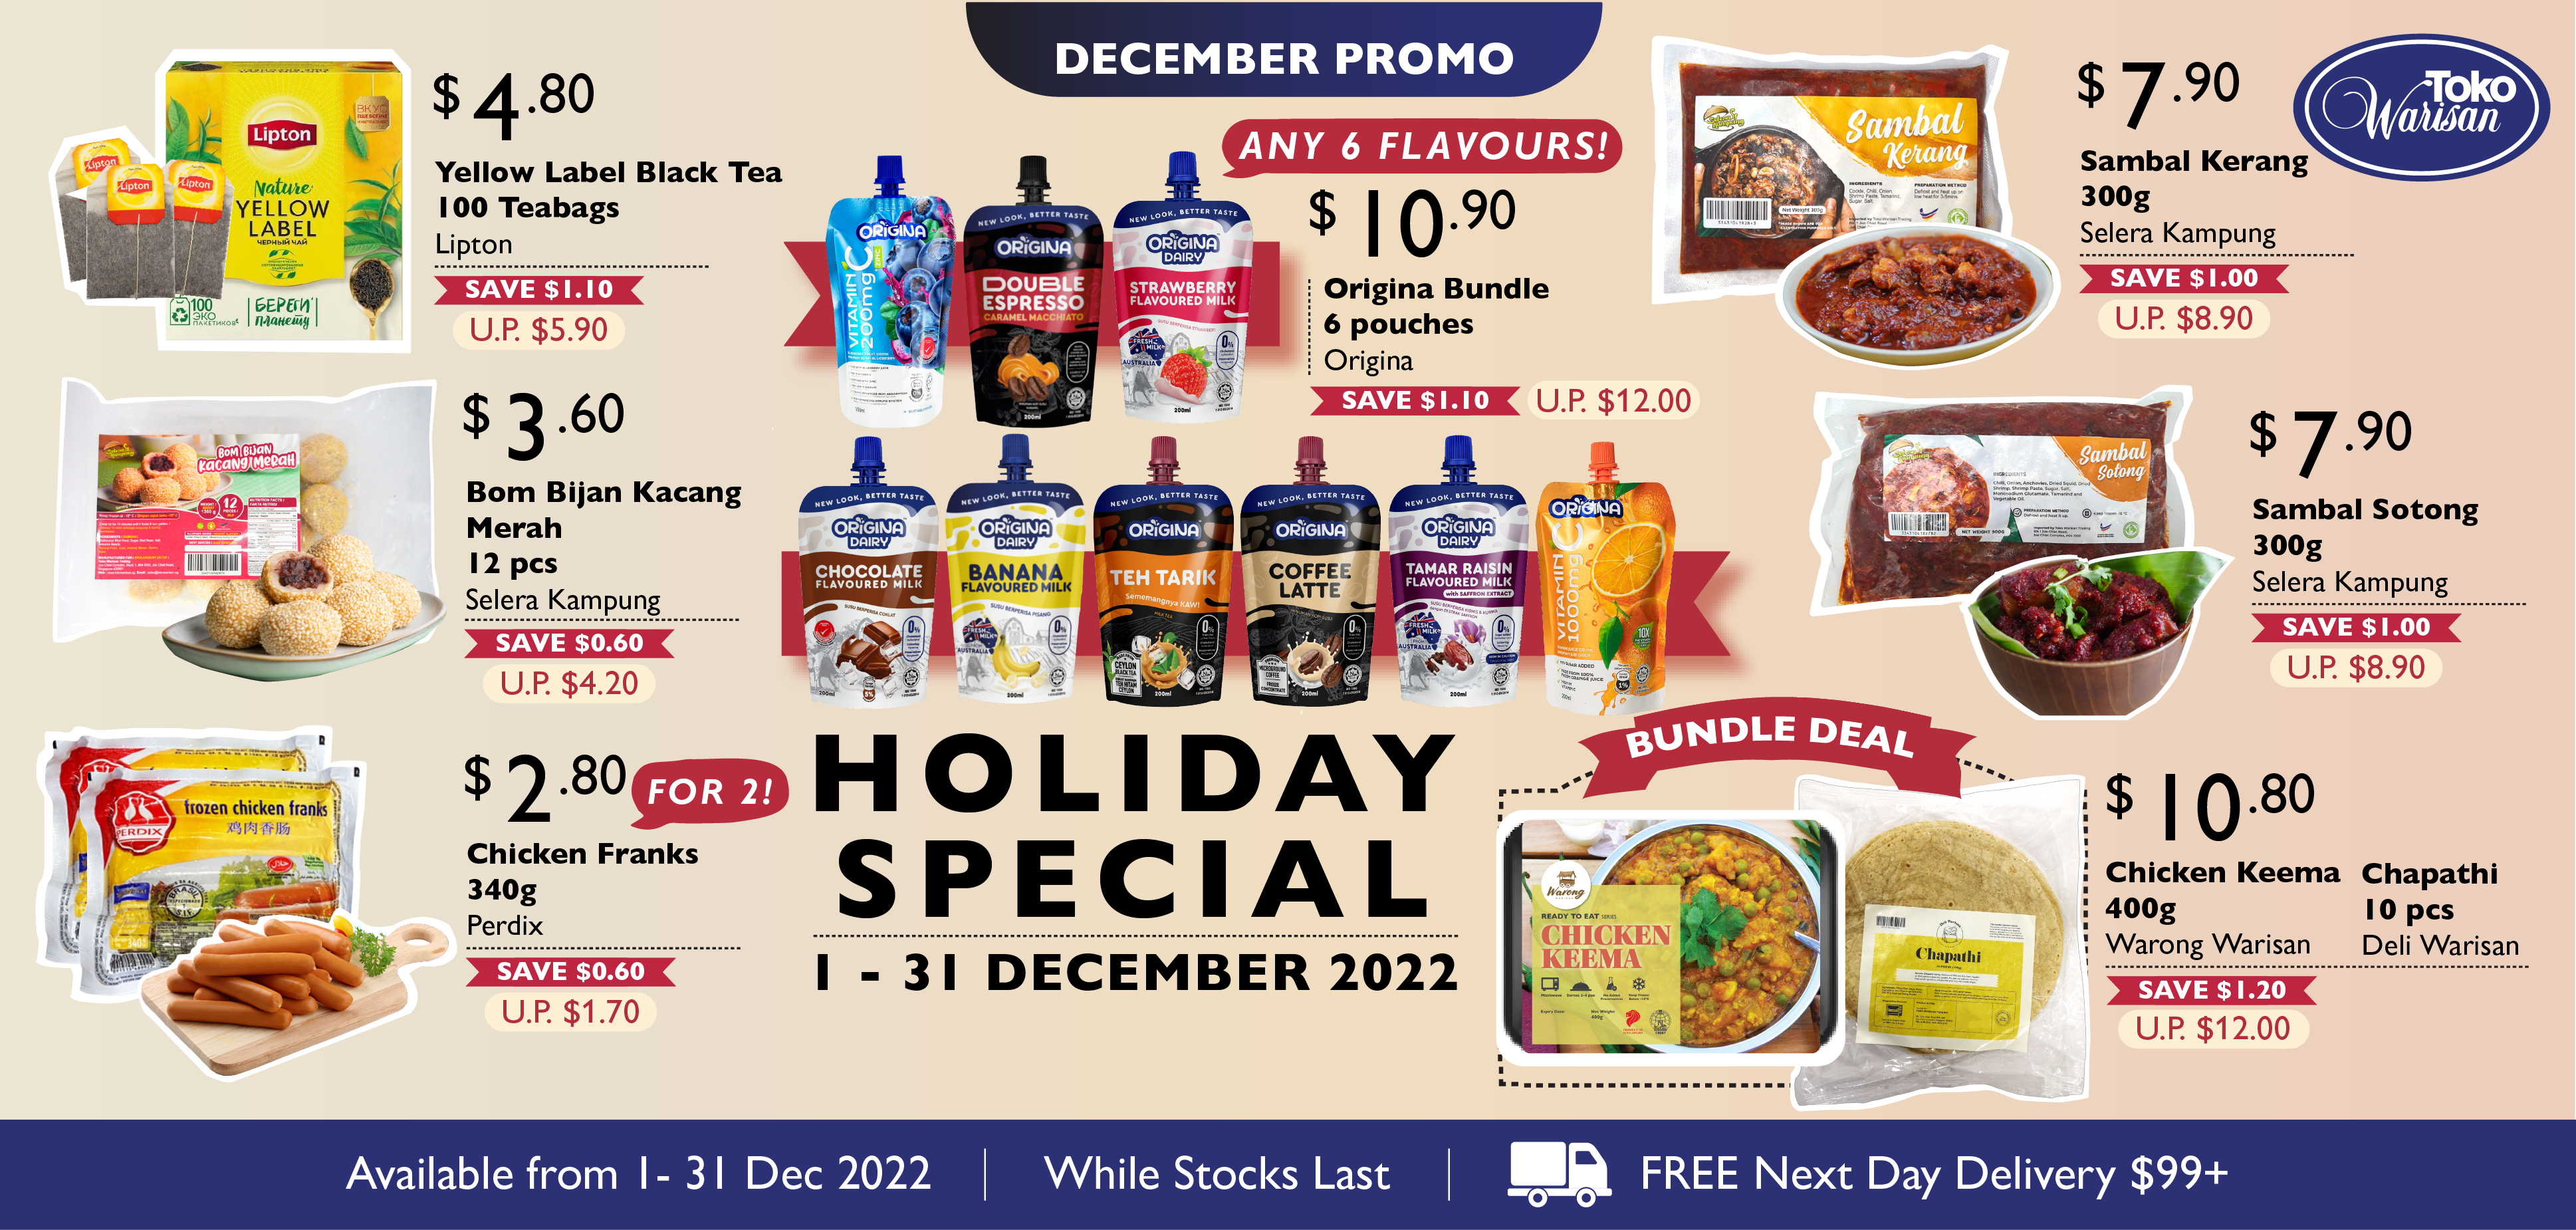 December Monthly Promotion Halal Frozen Toko Warisan